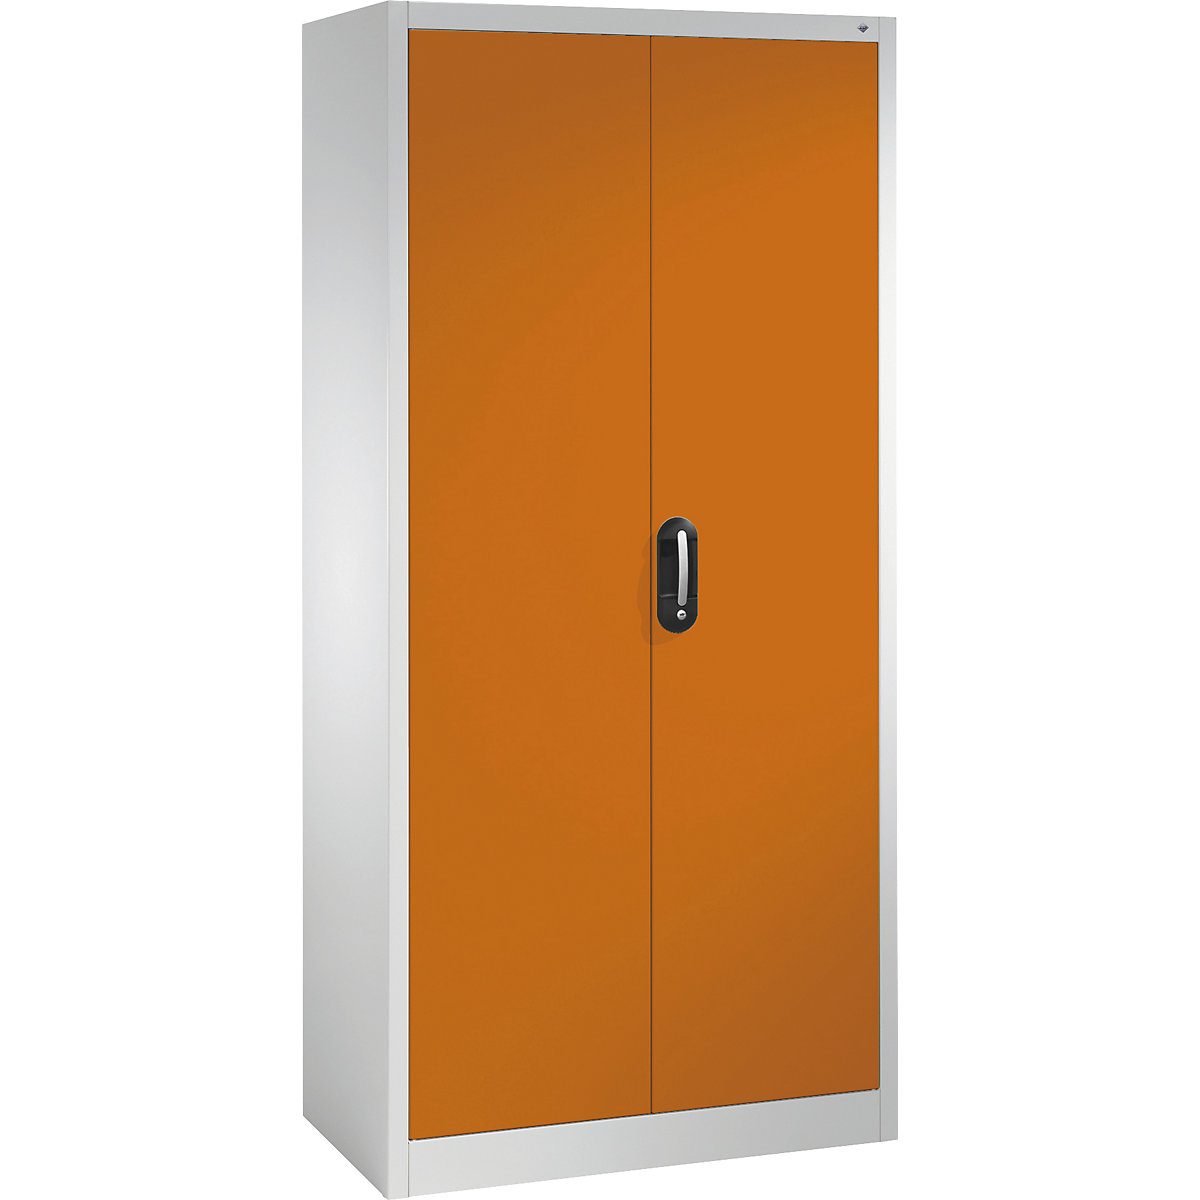 ACURADO universal cupboard – C+P, WxD 930 x 400 mm, light grey / yellow orange, 2+ items-34